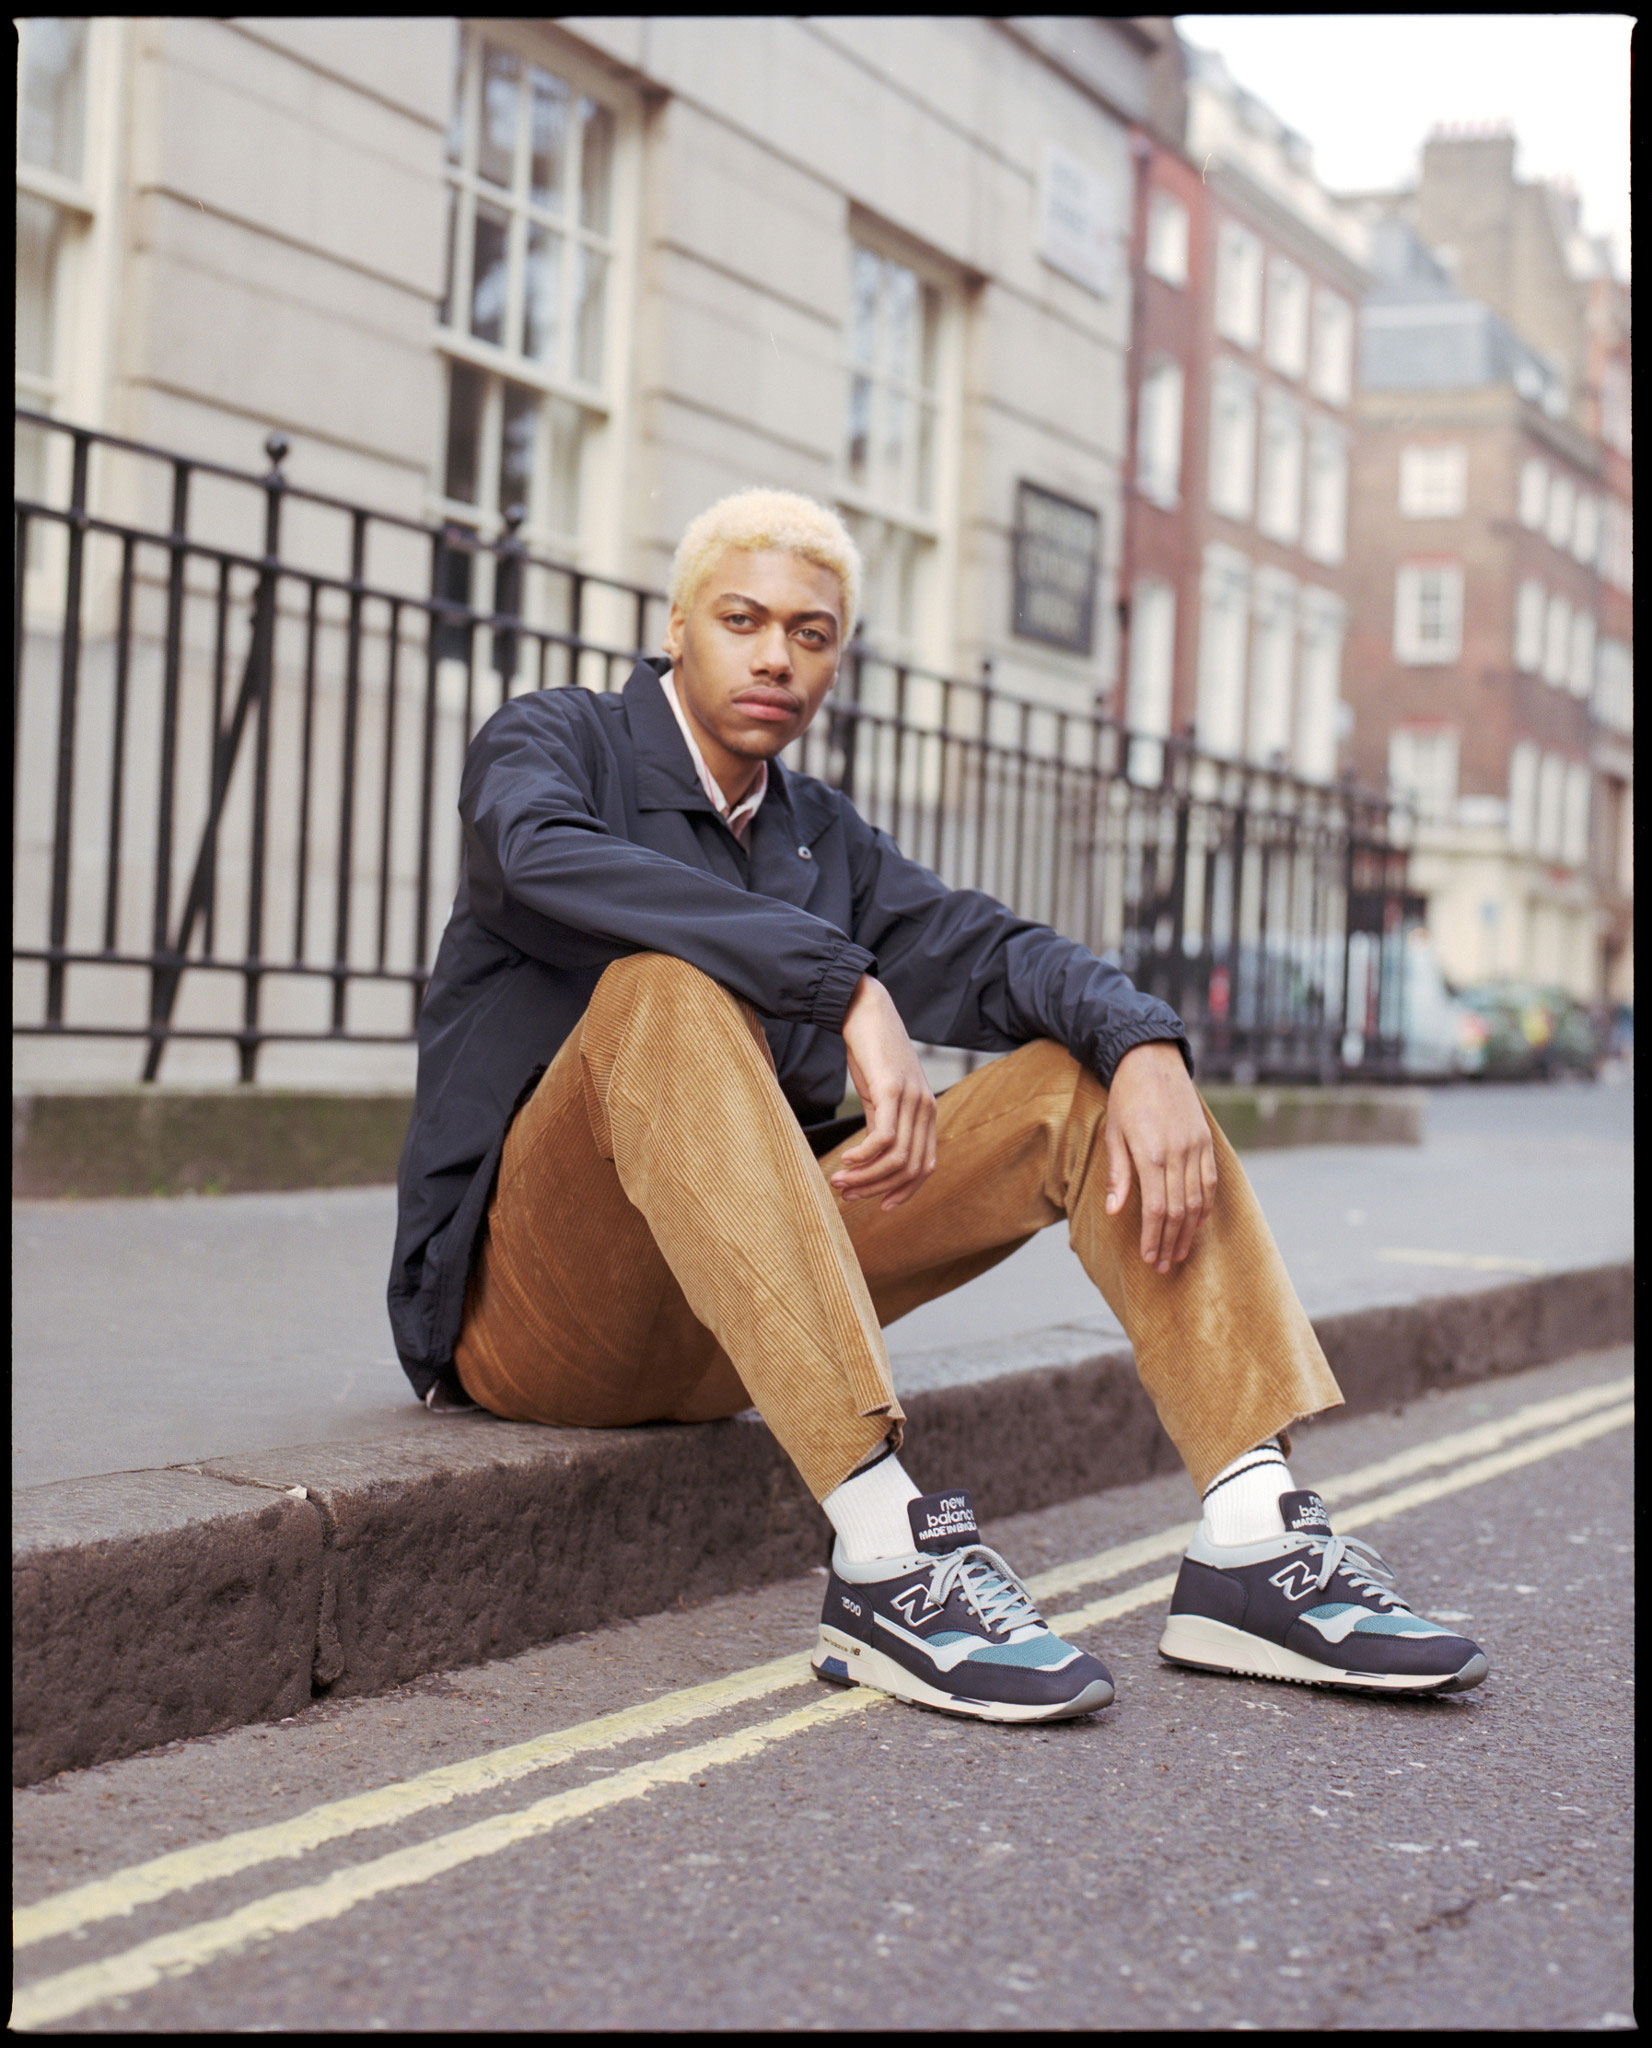 Rebaja delicado Pef EXCLUSIVE: New Balance Unveils Their Made-in-UK Sneaker Range